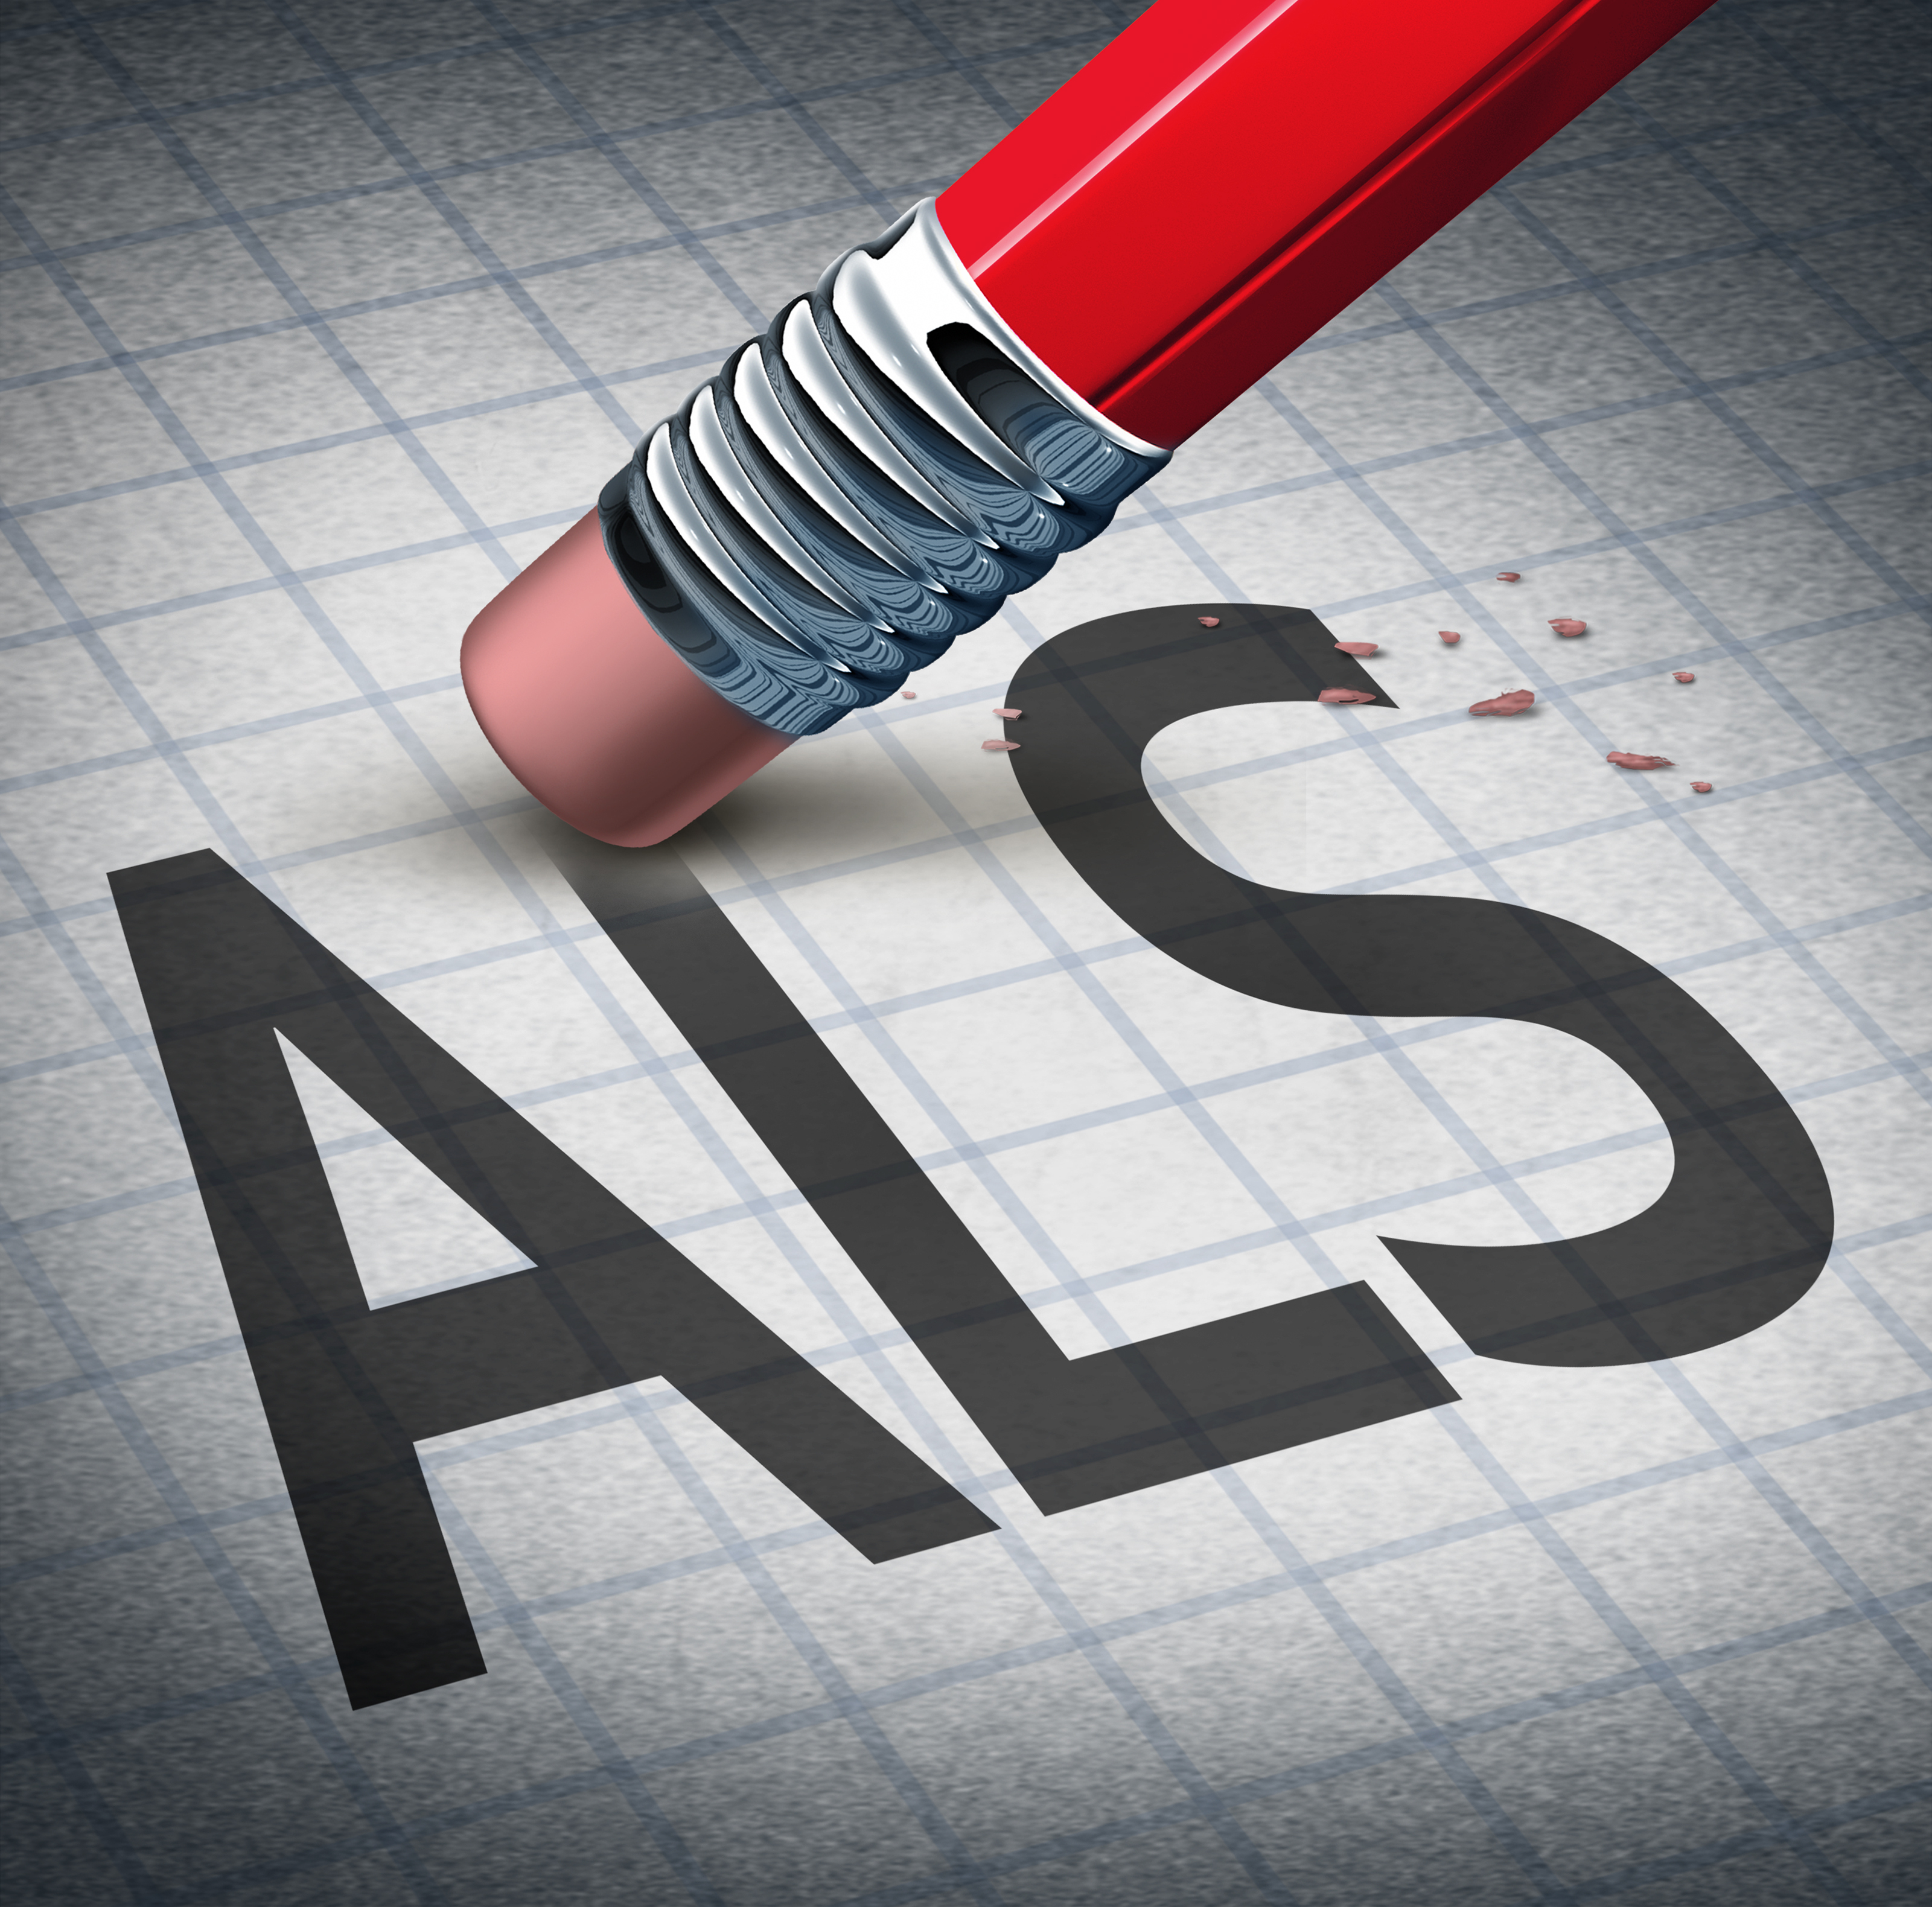 Most Promising ALS Cure Breakthrough So Far